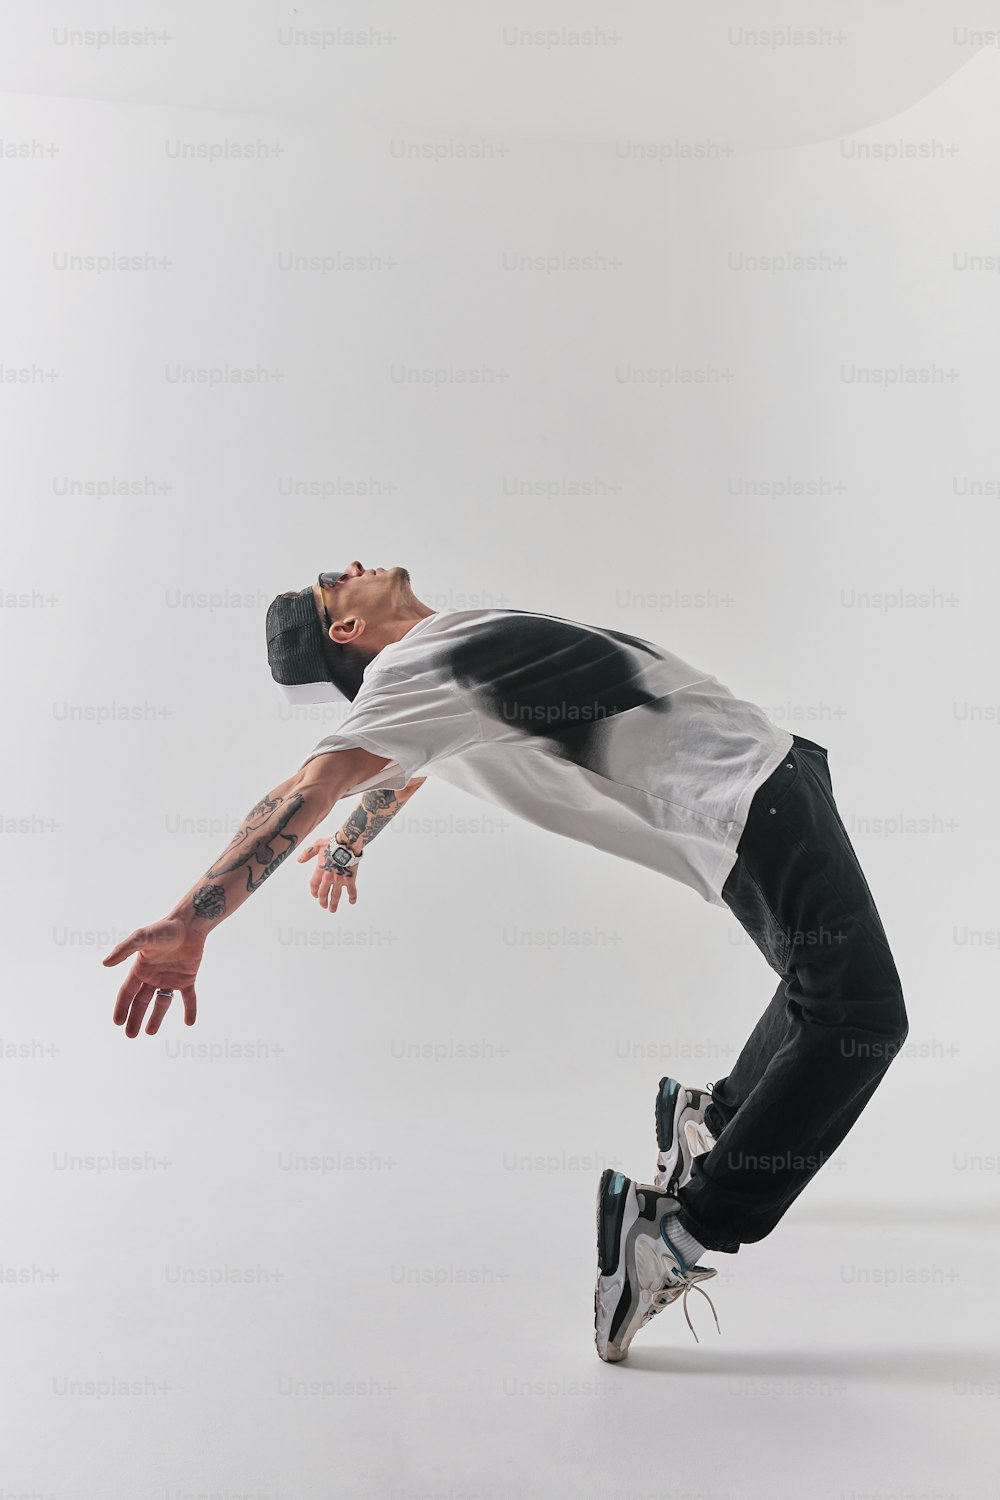 Un uomo sta facendo un trick su uno skateboard